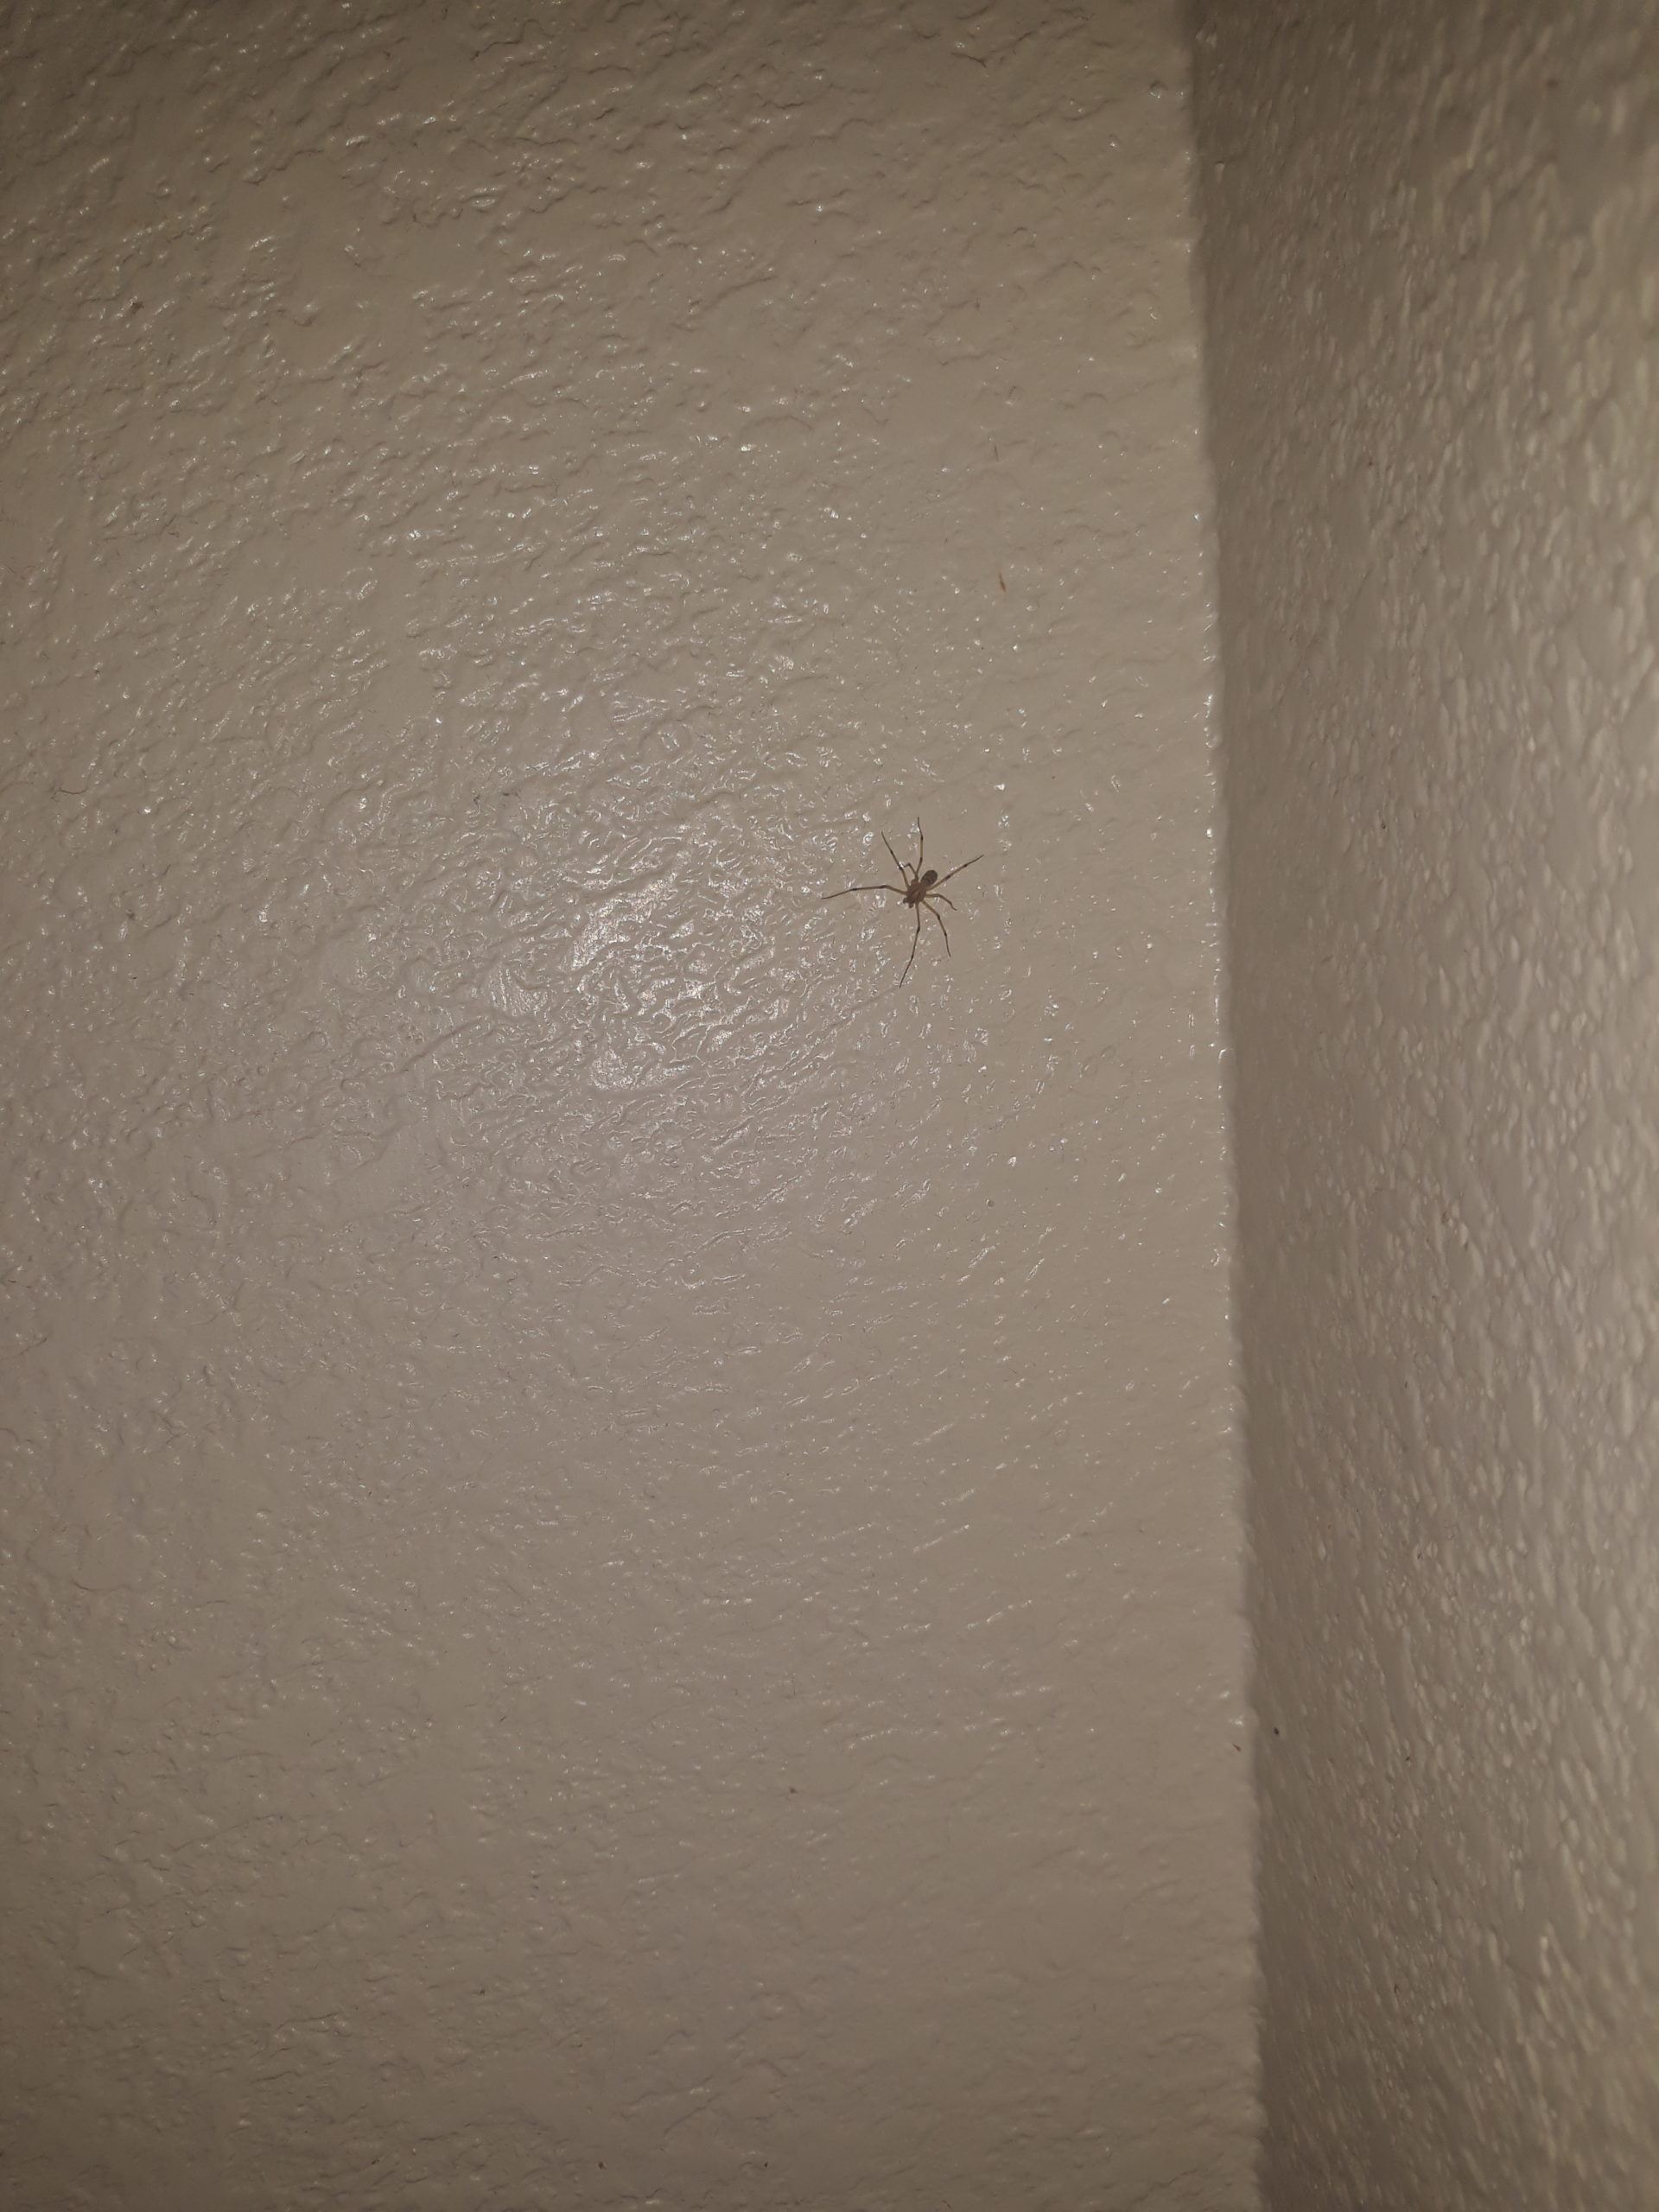 Unidentified spider in Las Vegas , Nevada United States